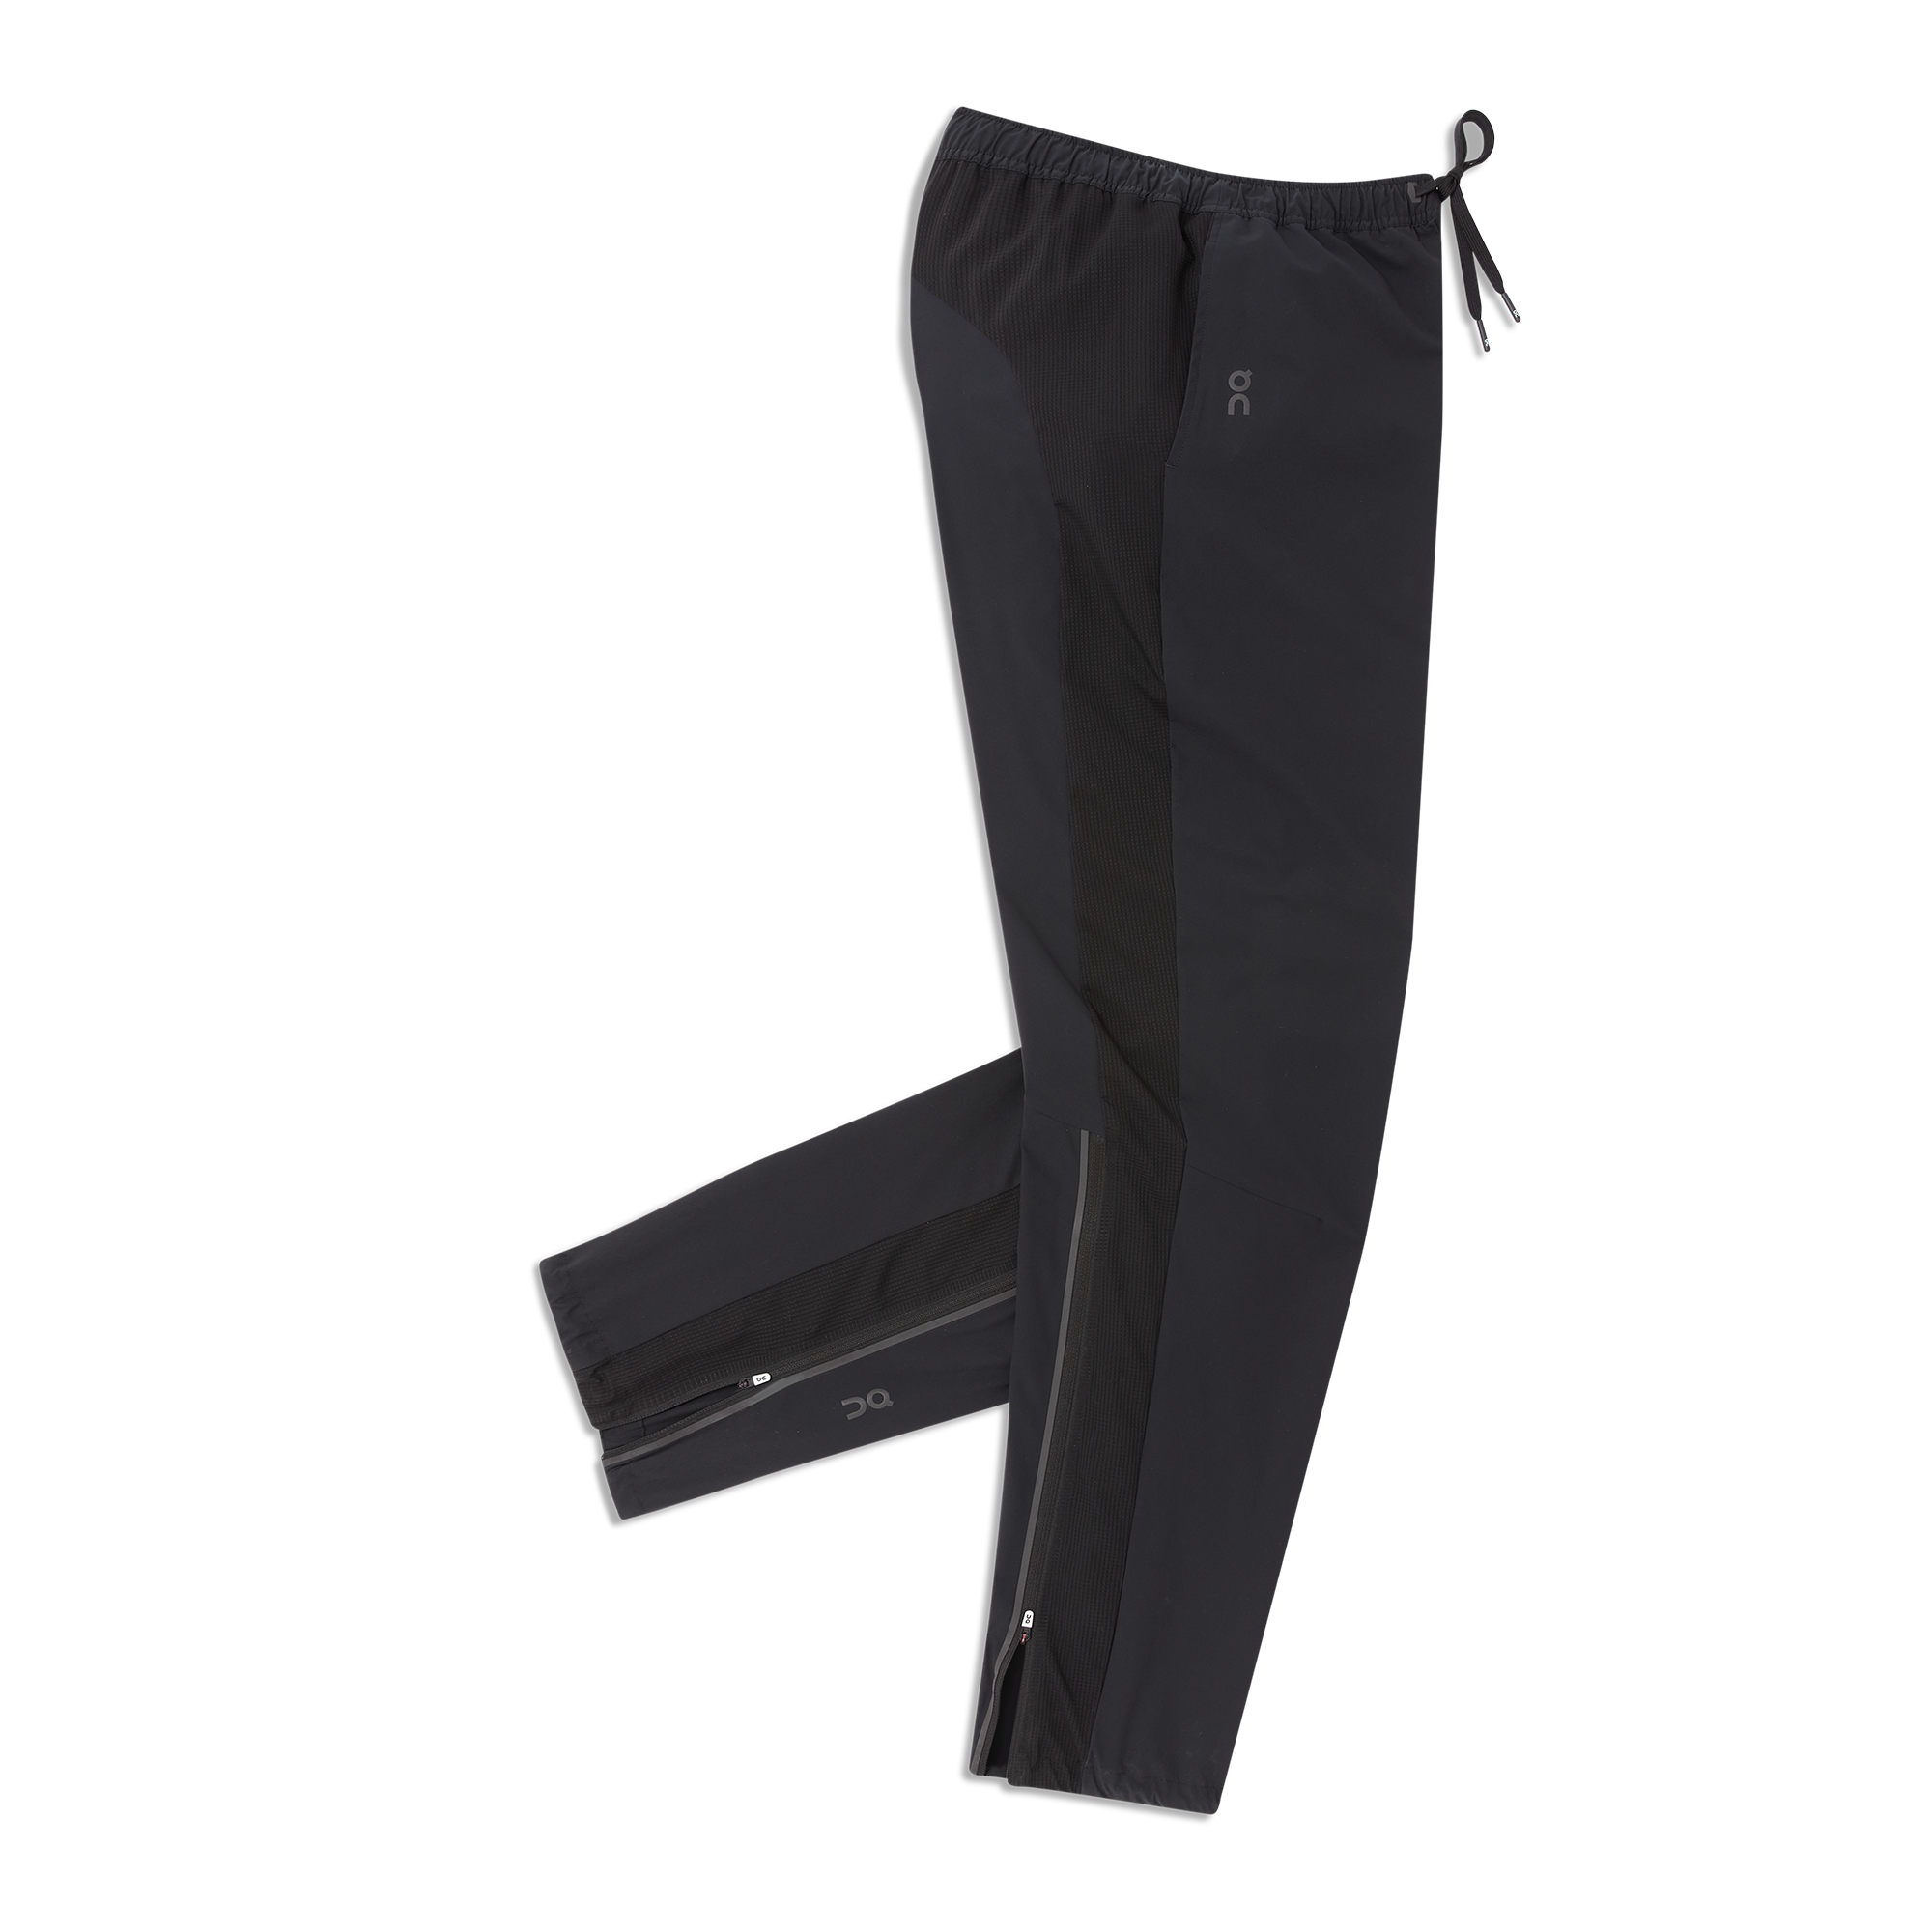 Buy Women Black Regular Fit Solid Casual Track Pants Online - 610131